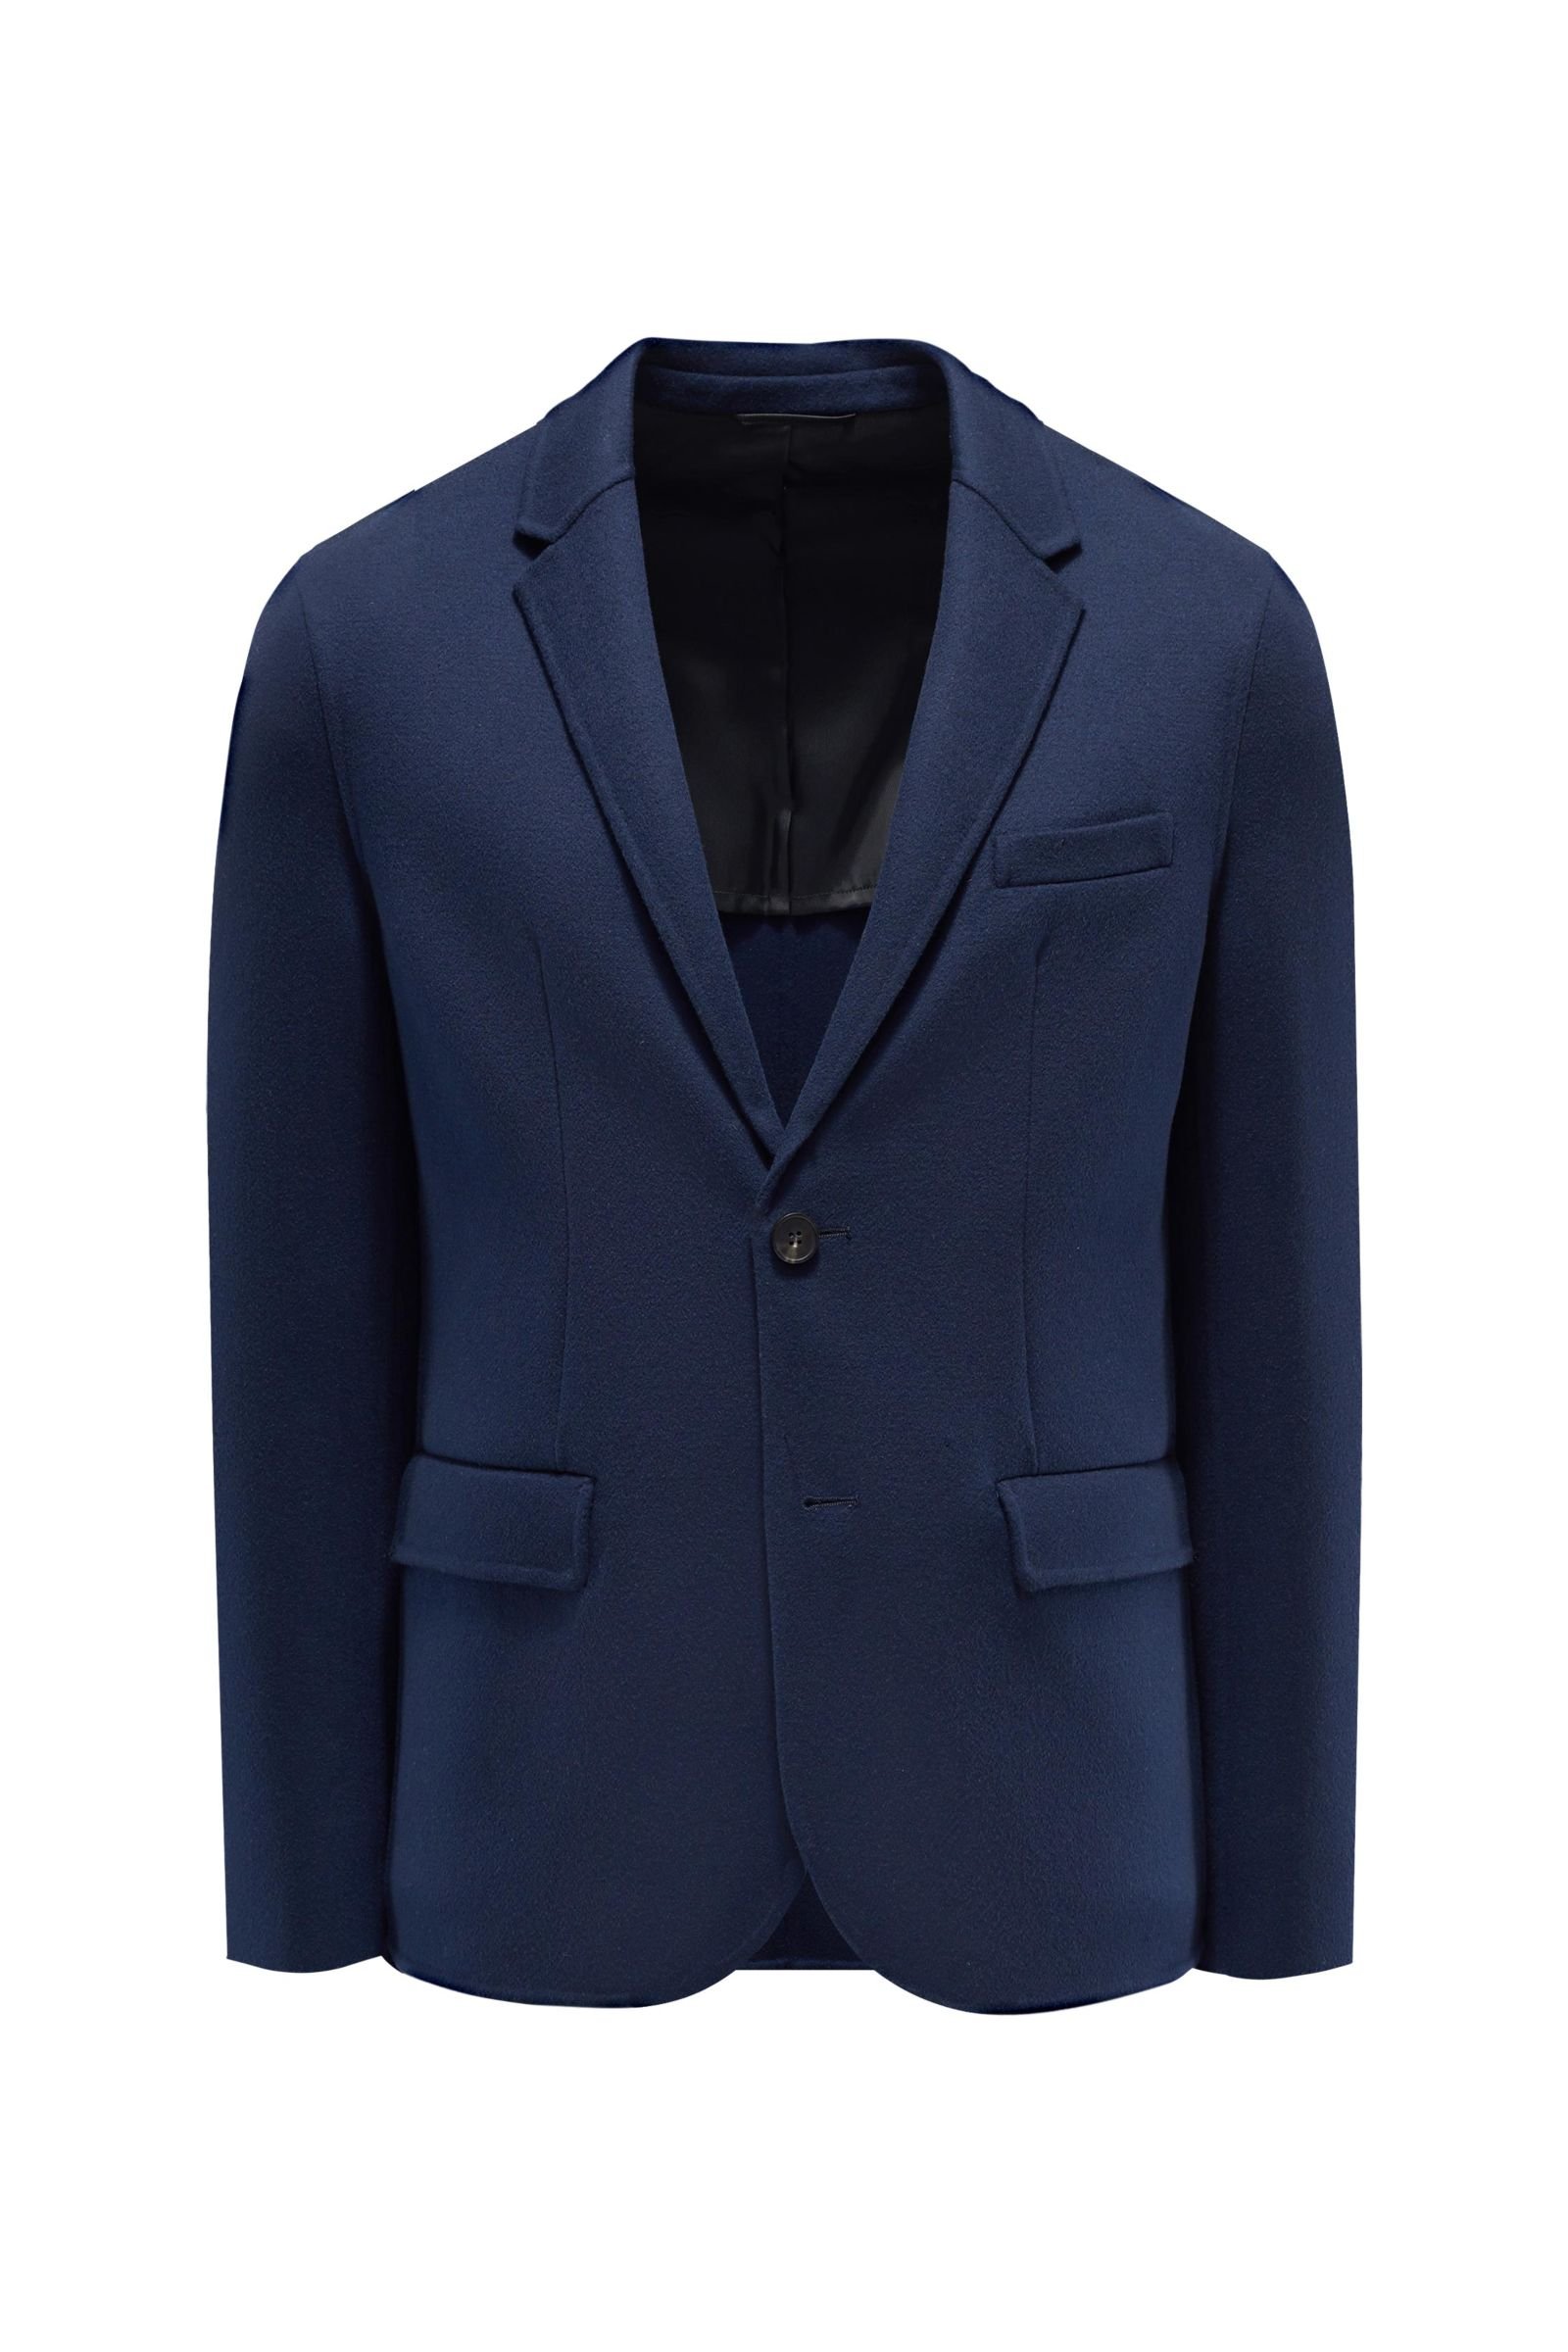 Smart-casual jacket 'Mells Luxe', dark blue